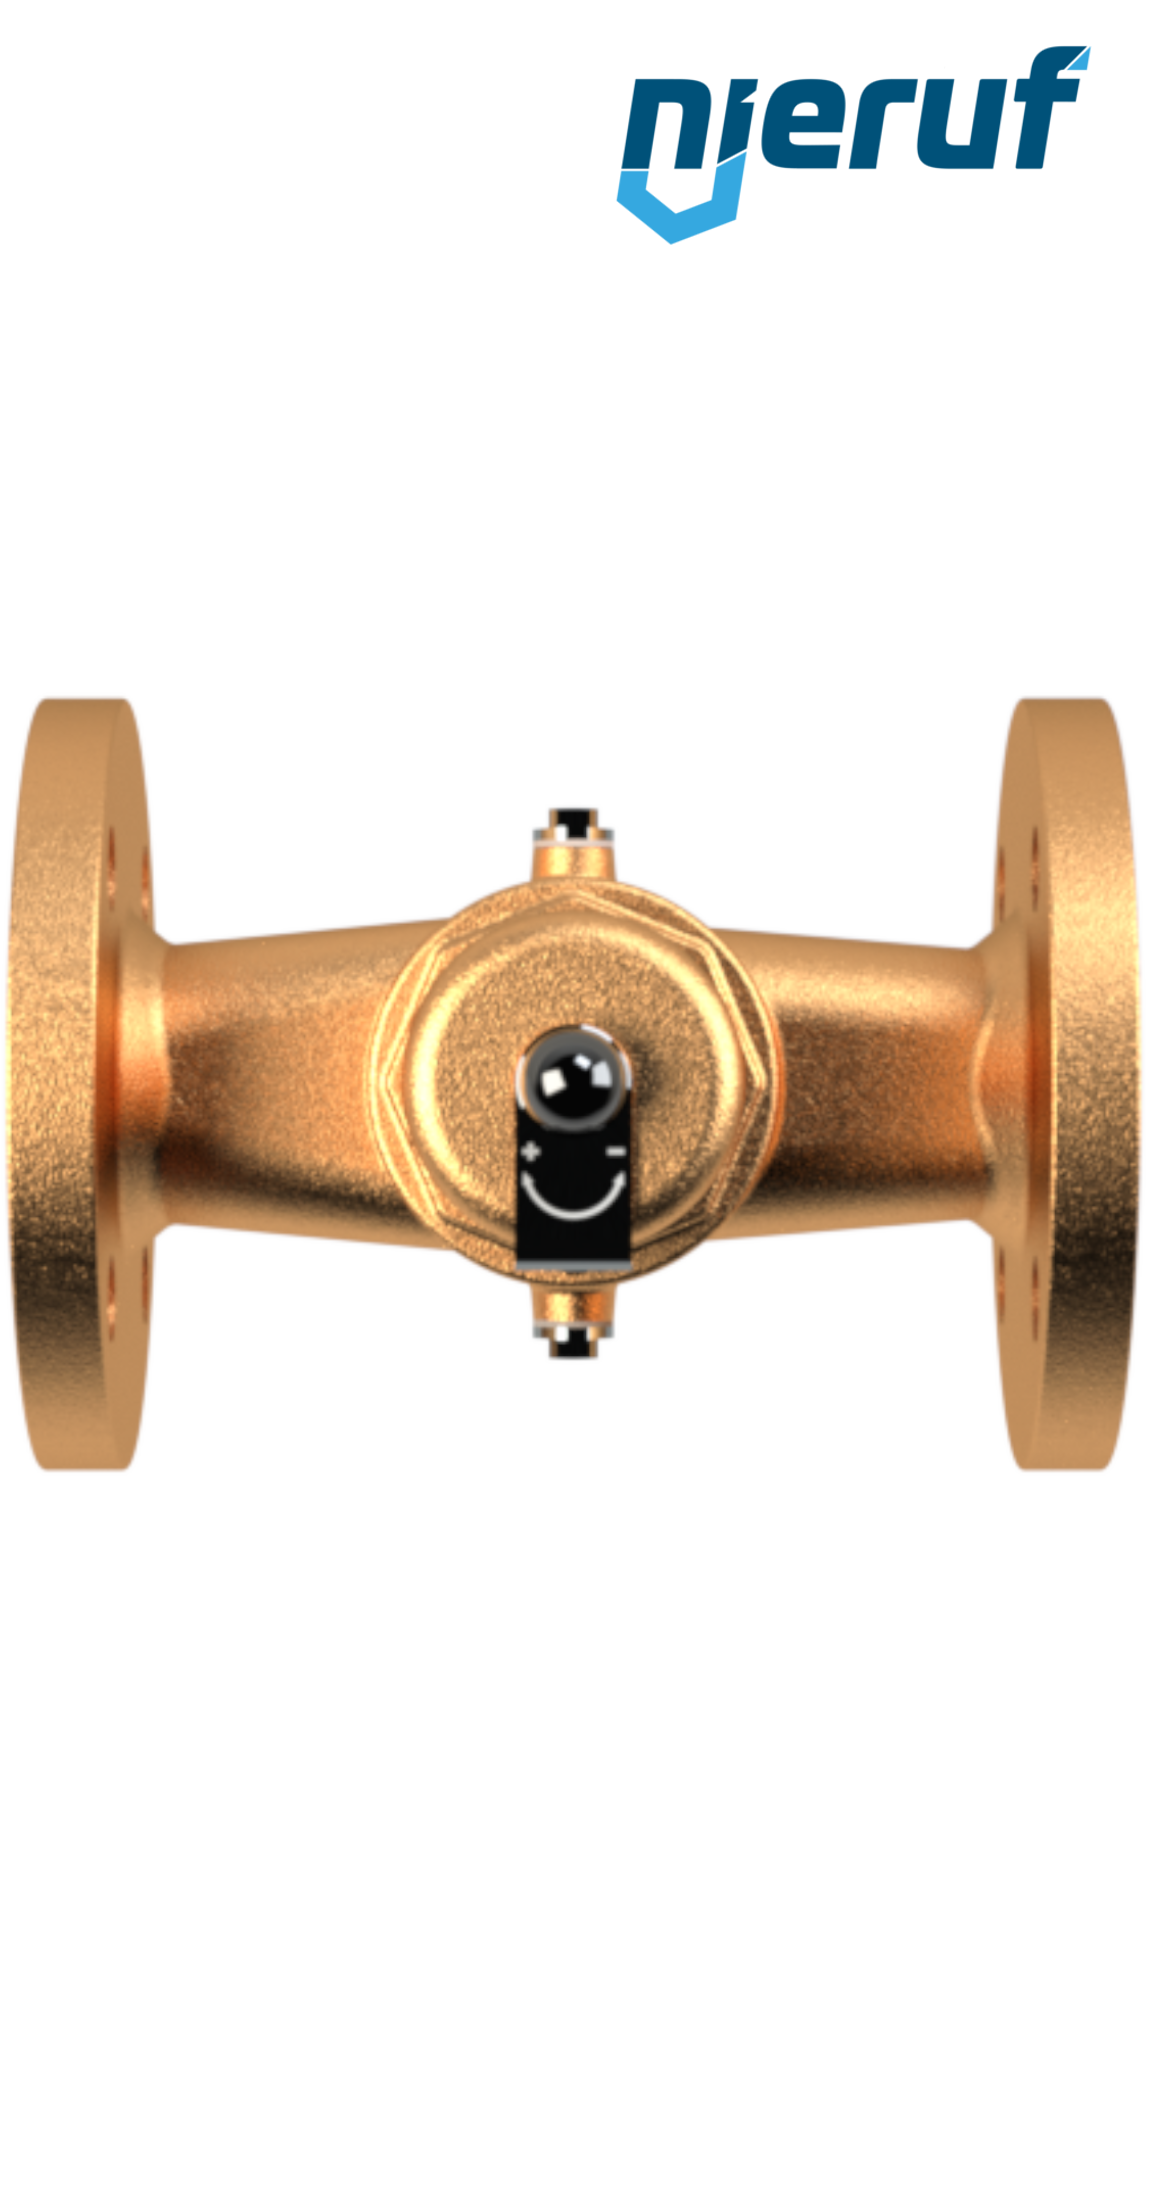 pressure reducing valve DN 25 PN16 DM06 gunmetal/brass FKM 1.0 - 8.0 bar